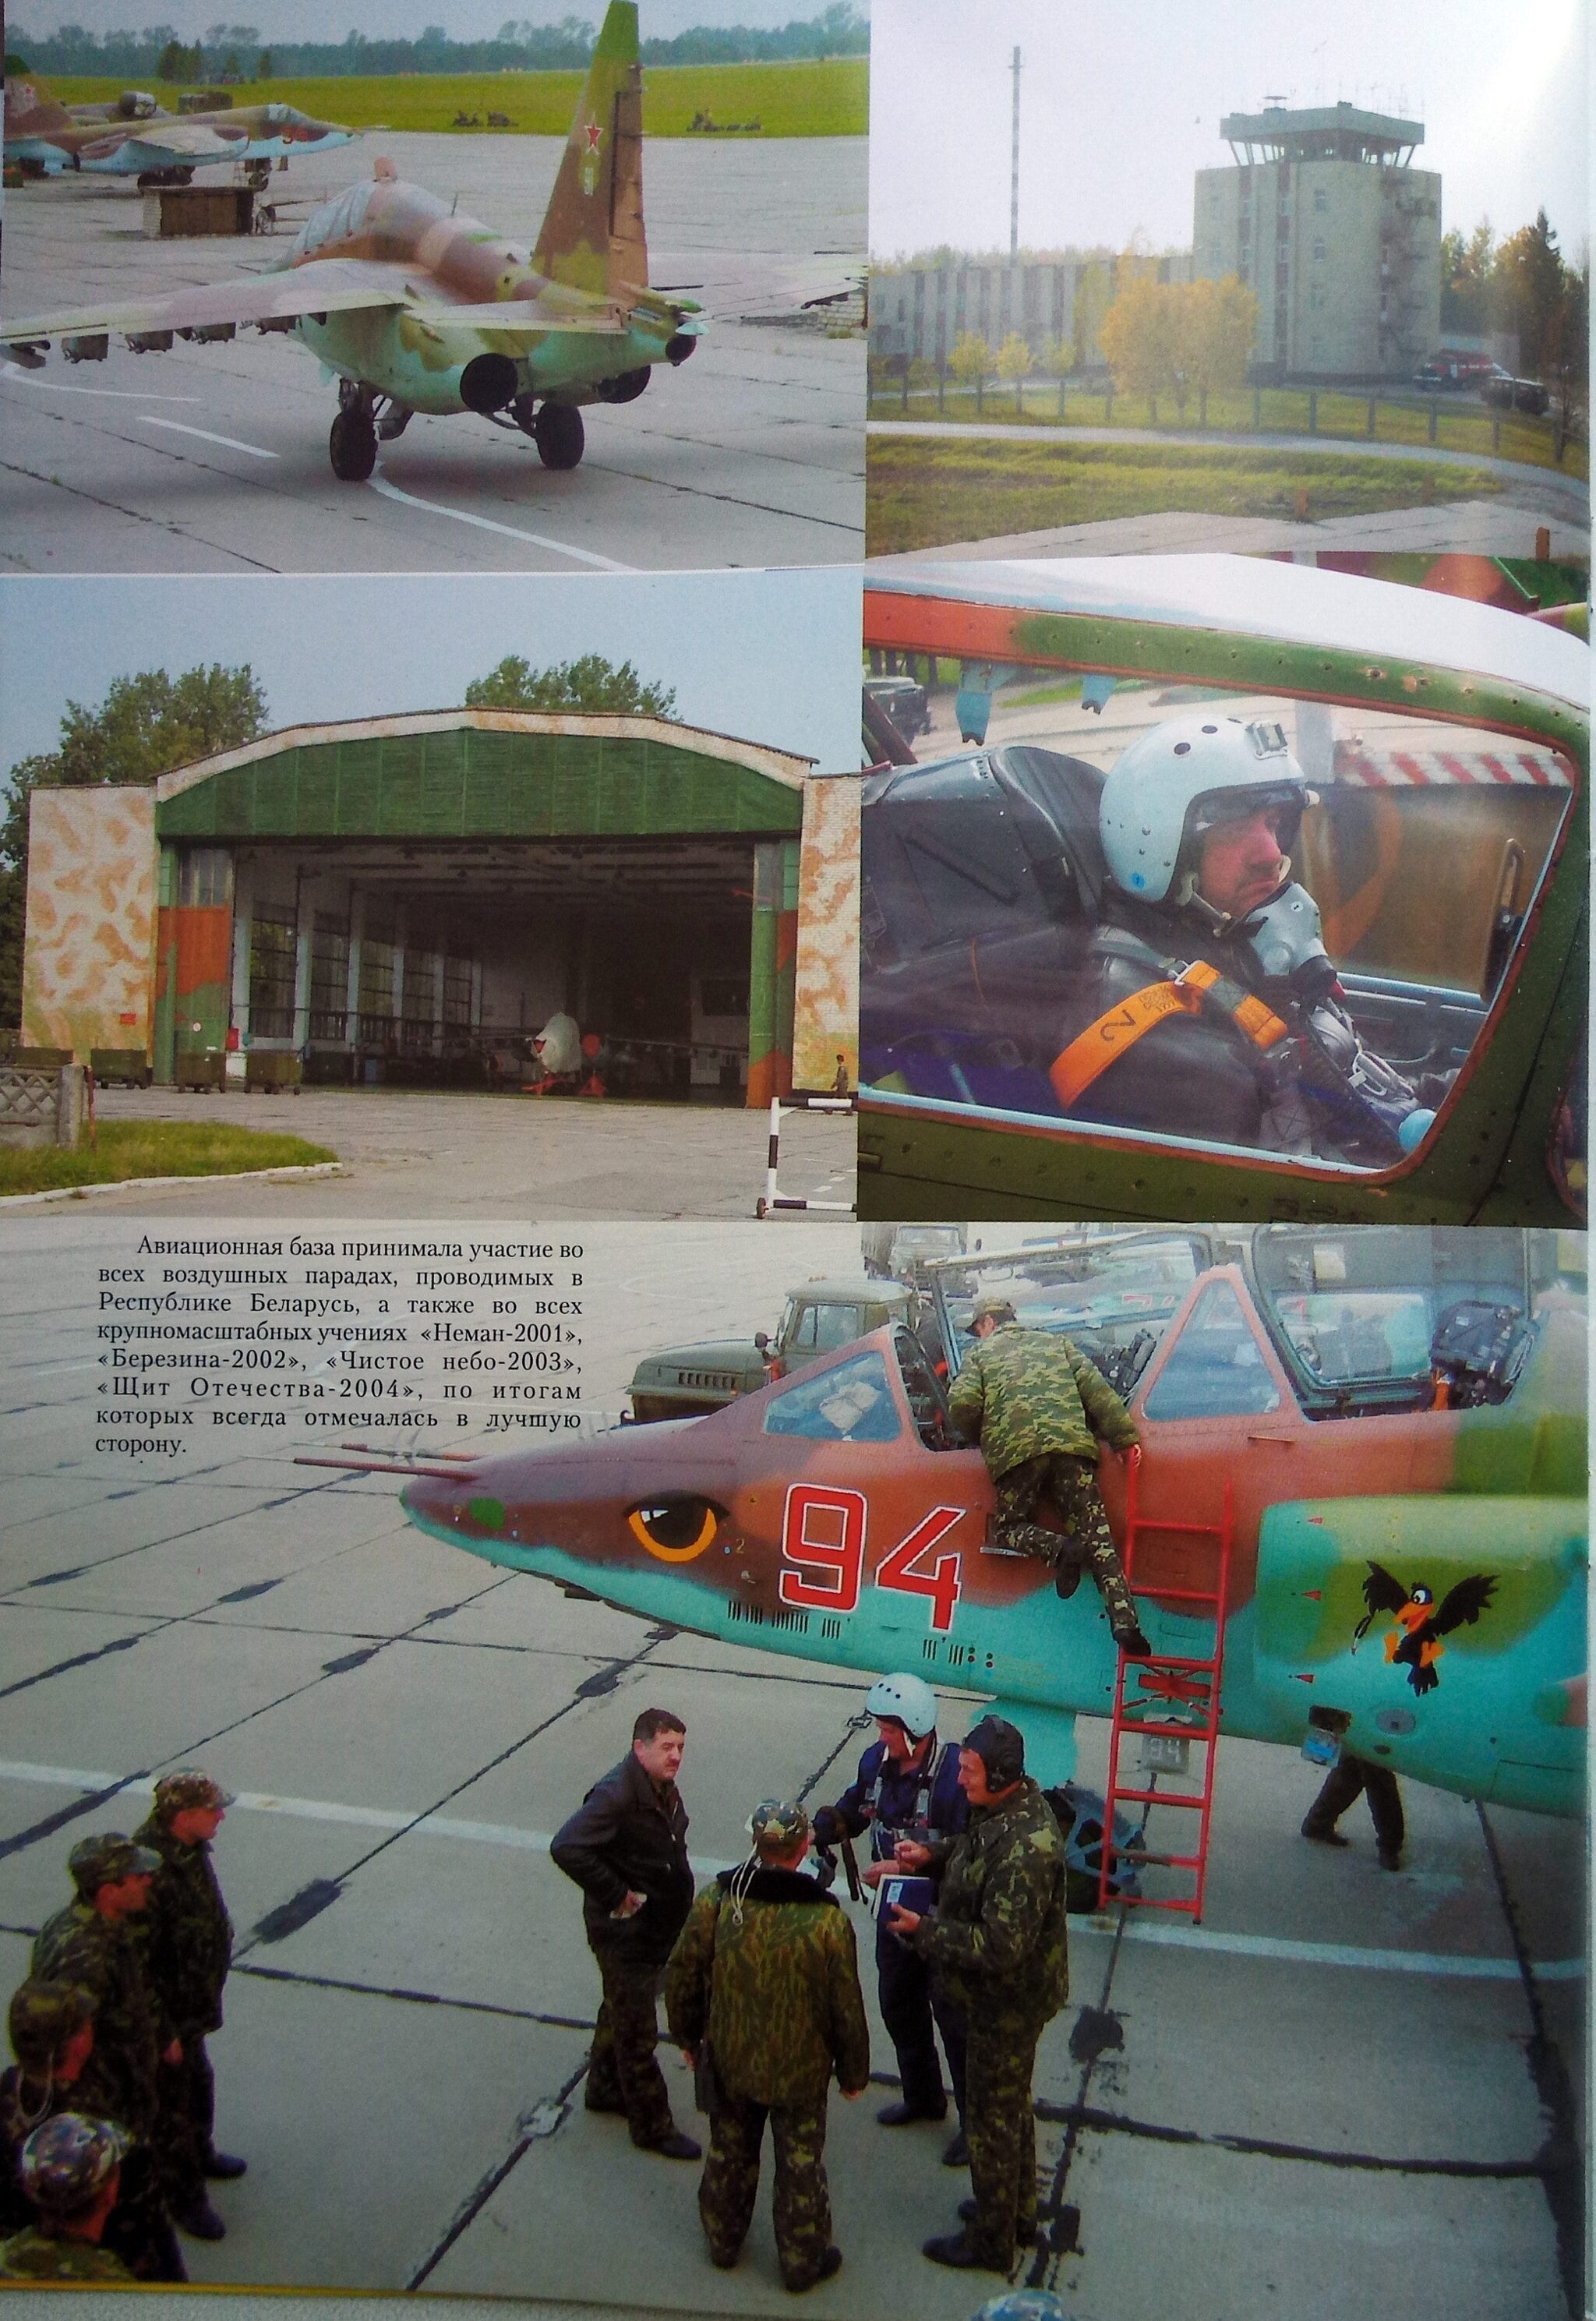 Anniversary photo album of the 206th air base. - Airplane, Lydia, Longpost